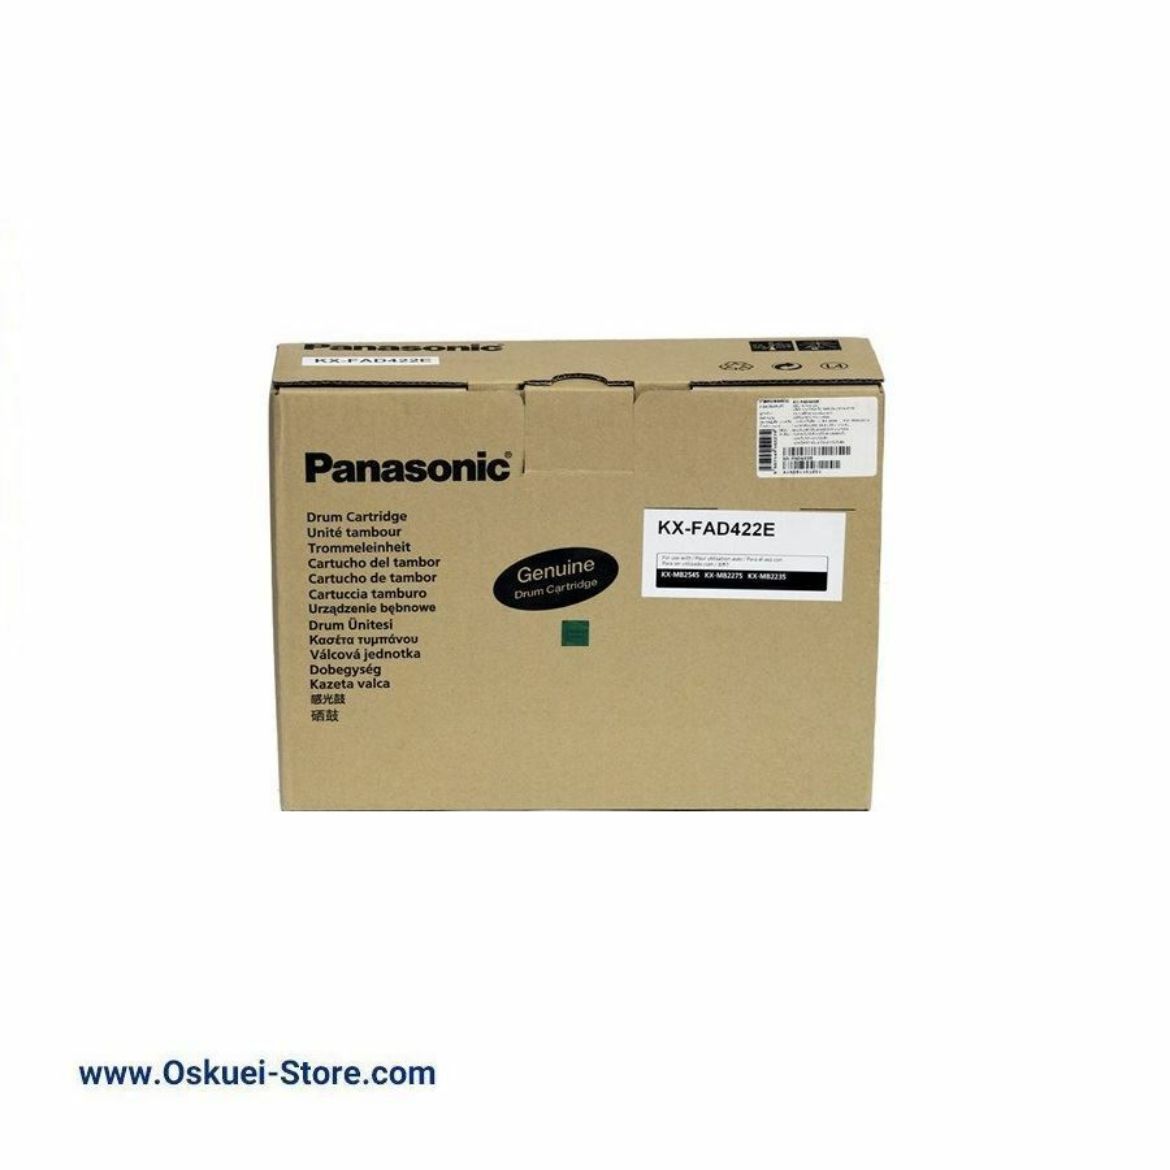 Panasonic KX-FAD422E Black Ink Cartridge Box For Panasonic Fax Machines